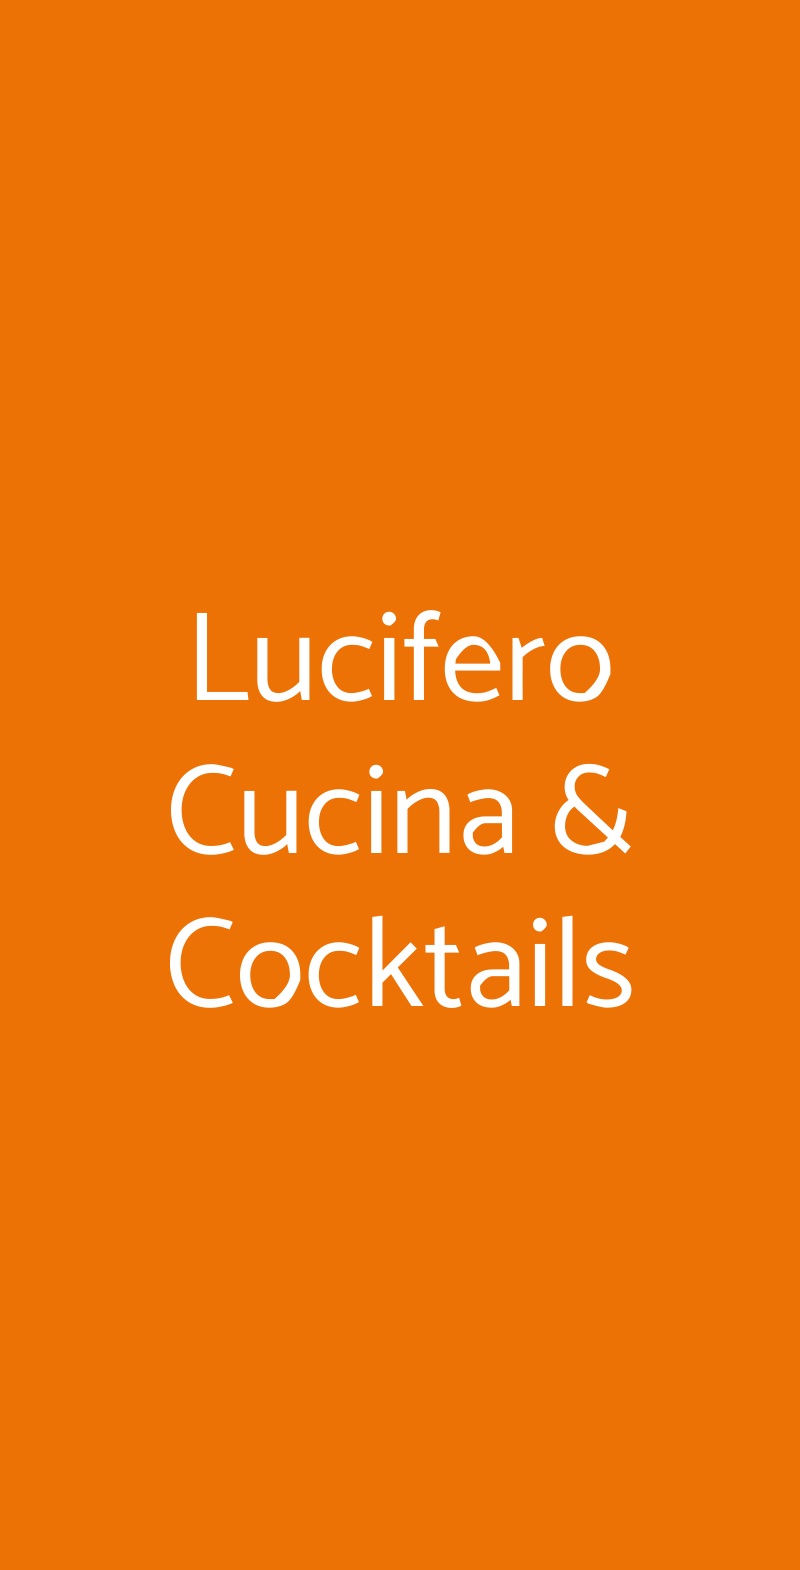 Lucifero Cucina & Cocktails Viareggio menù 1 pagina